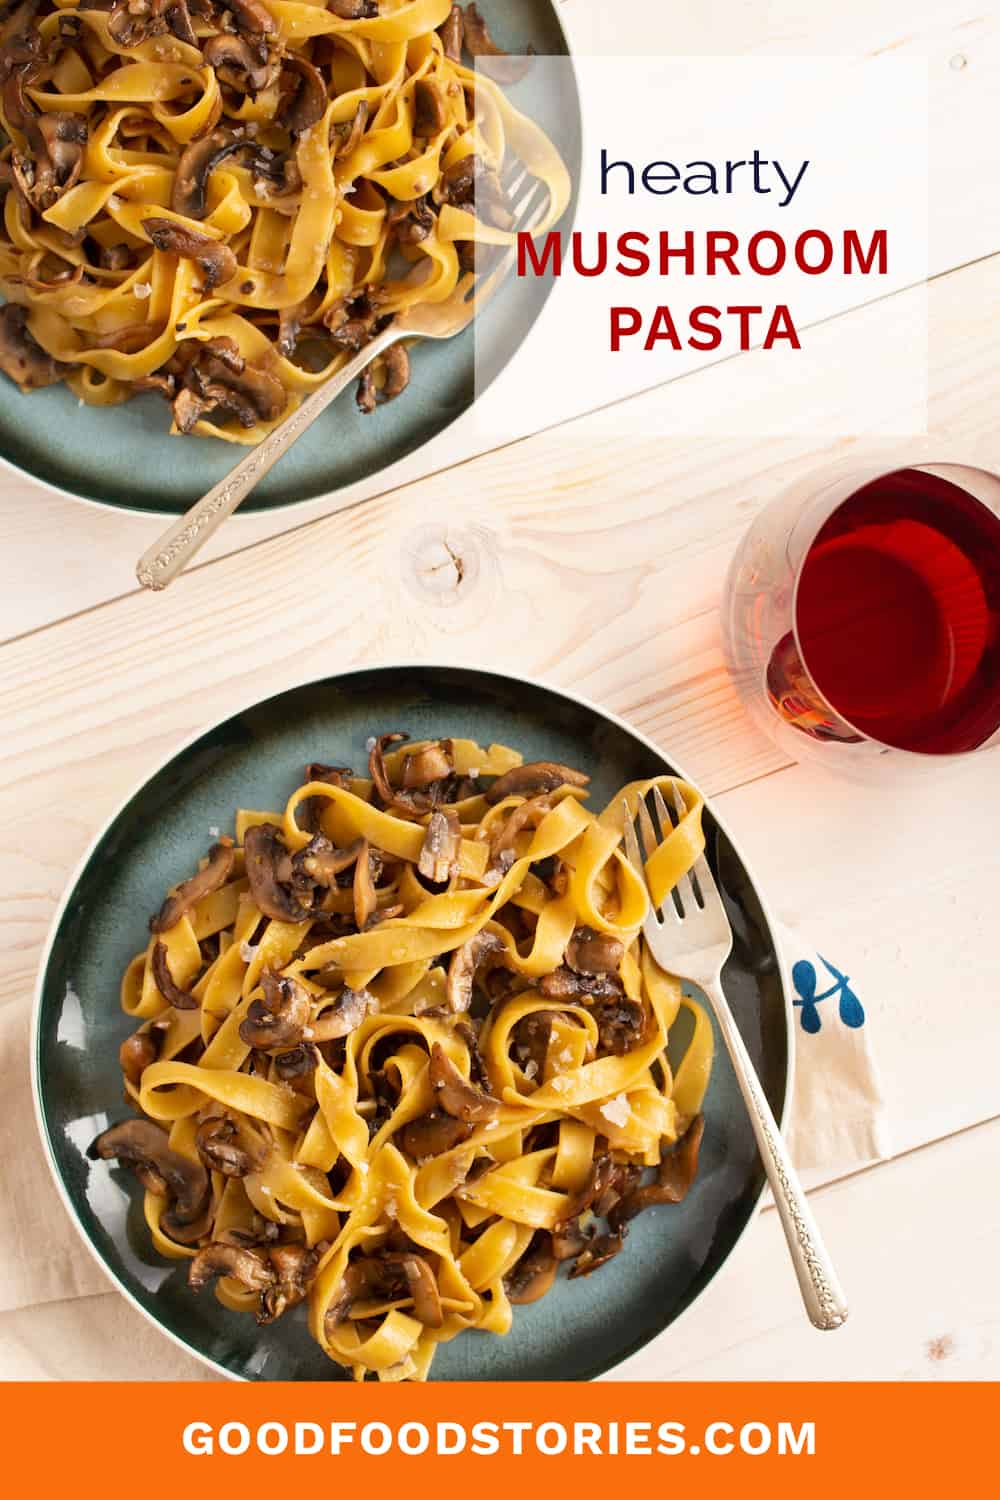 mushroom pasta with red wine